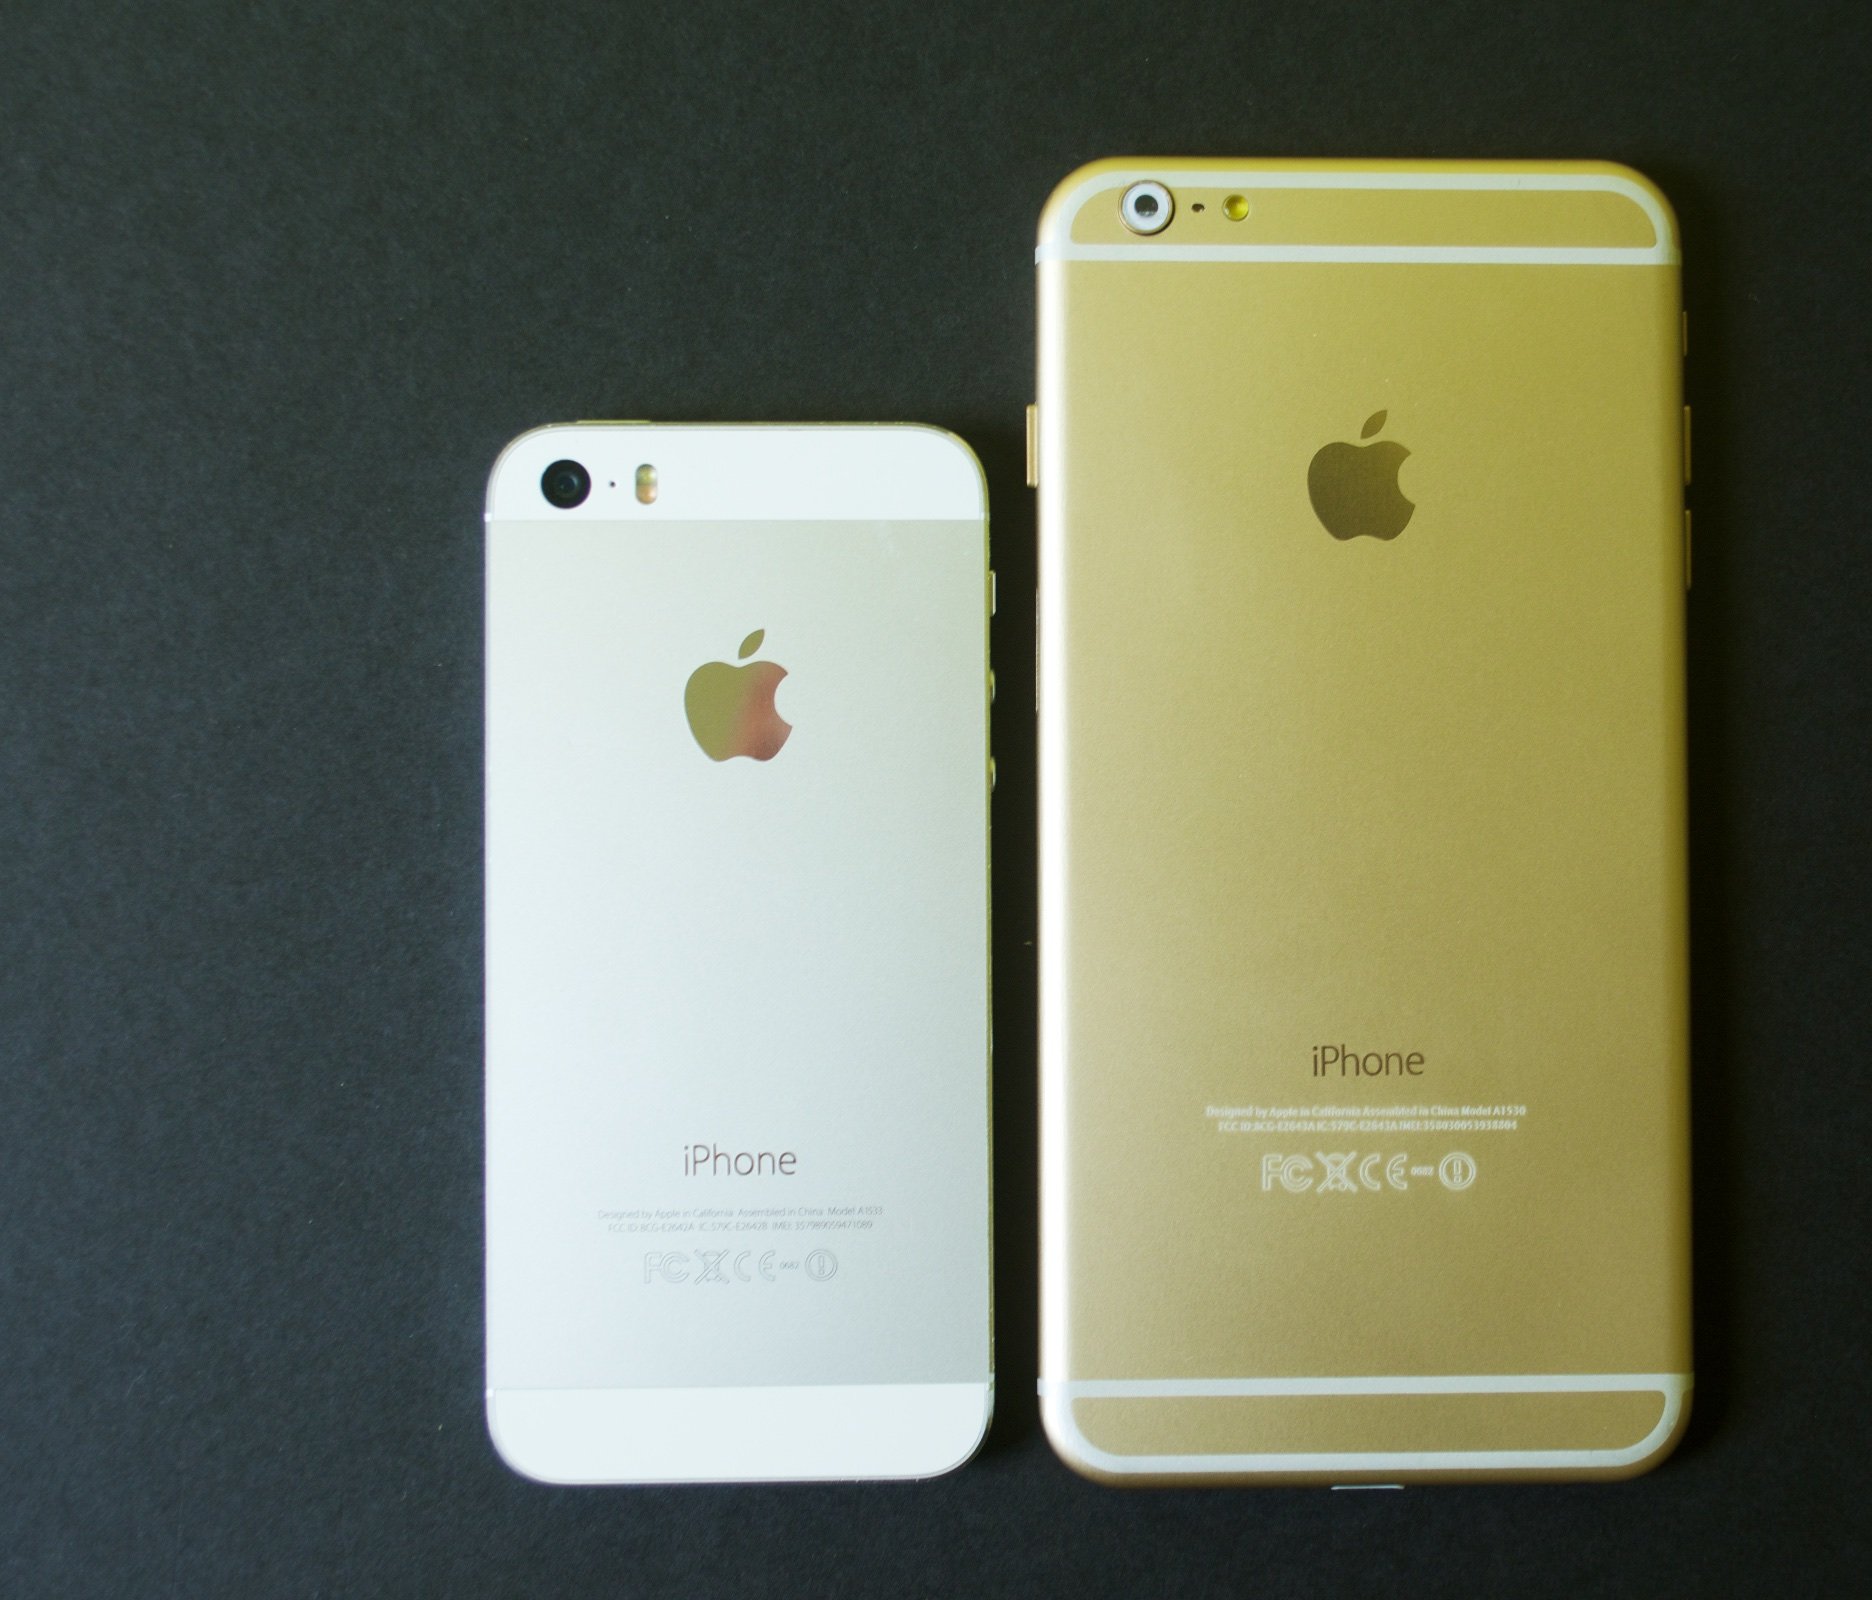 redden Reisbureau Verscheidenheid iPhone 6 vs iPhone 5s: 5 Things to Know About the Big iPhone